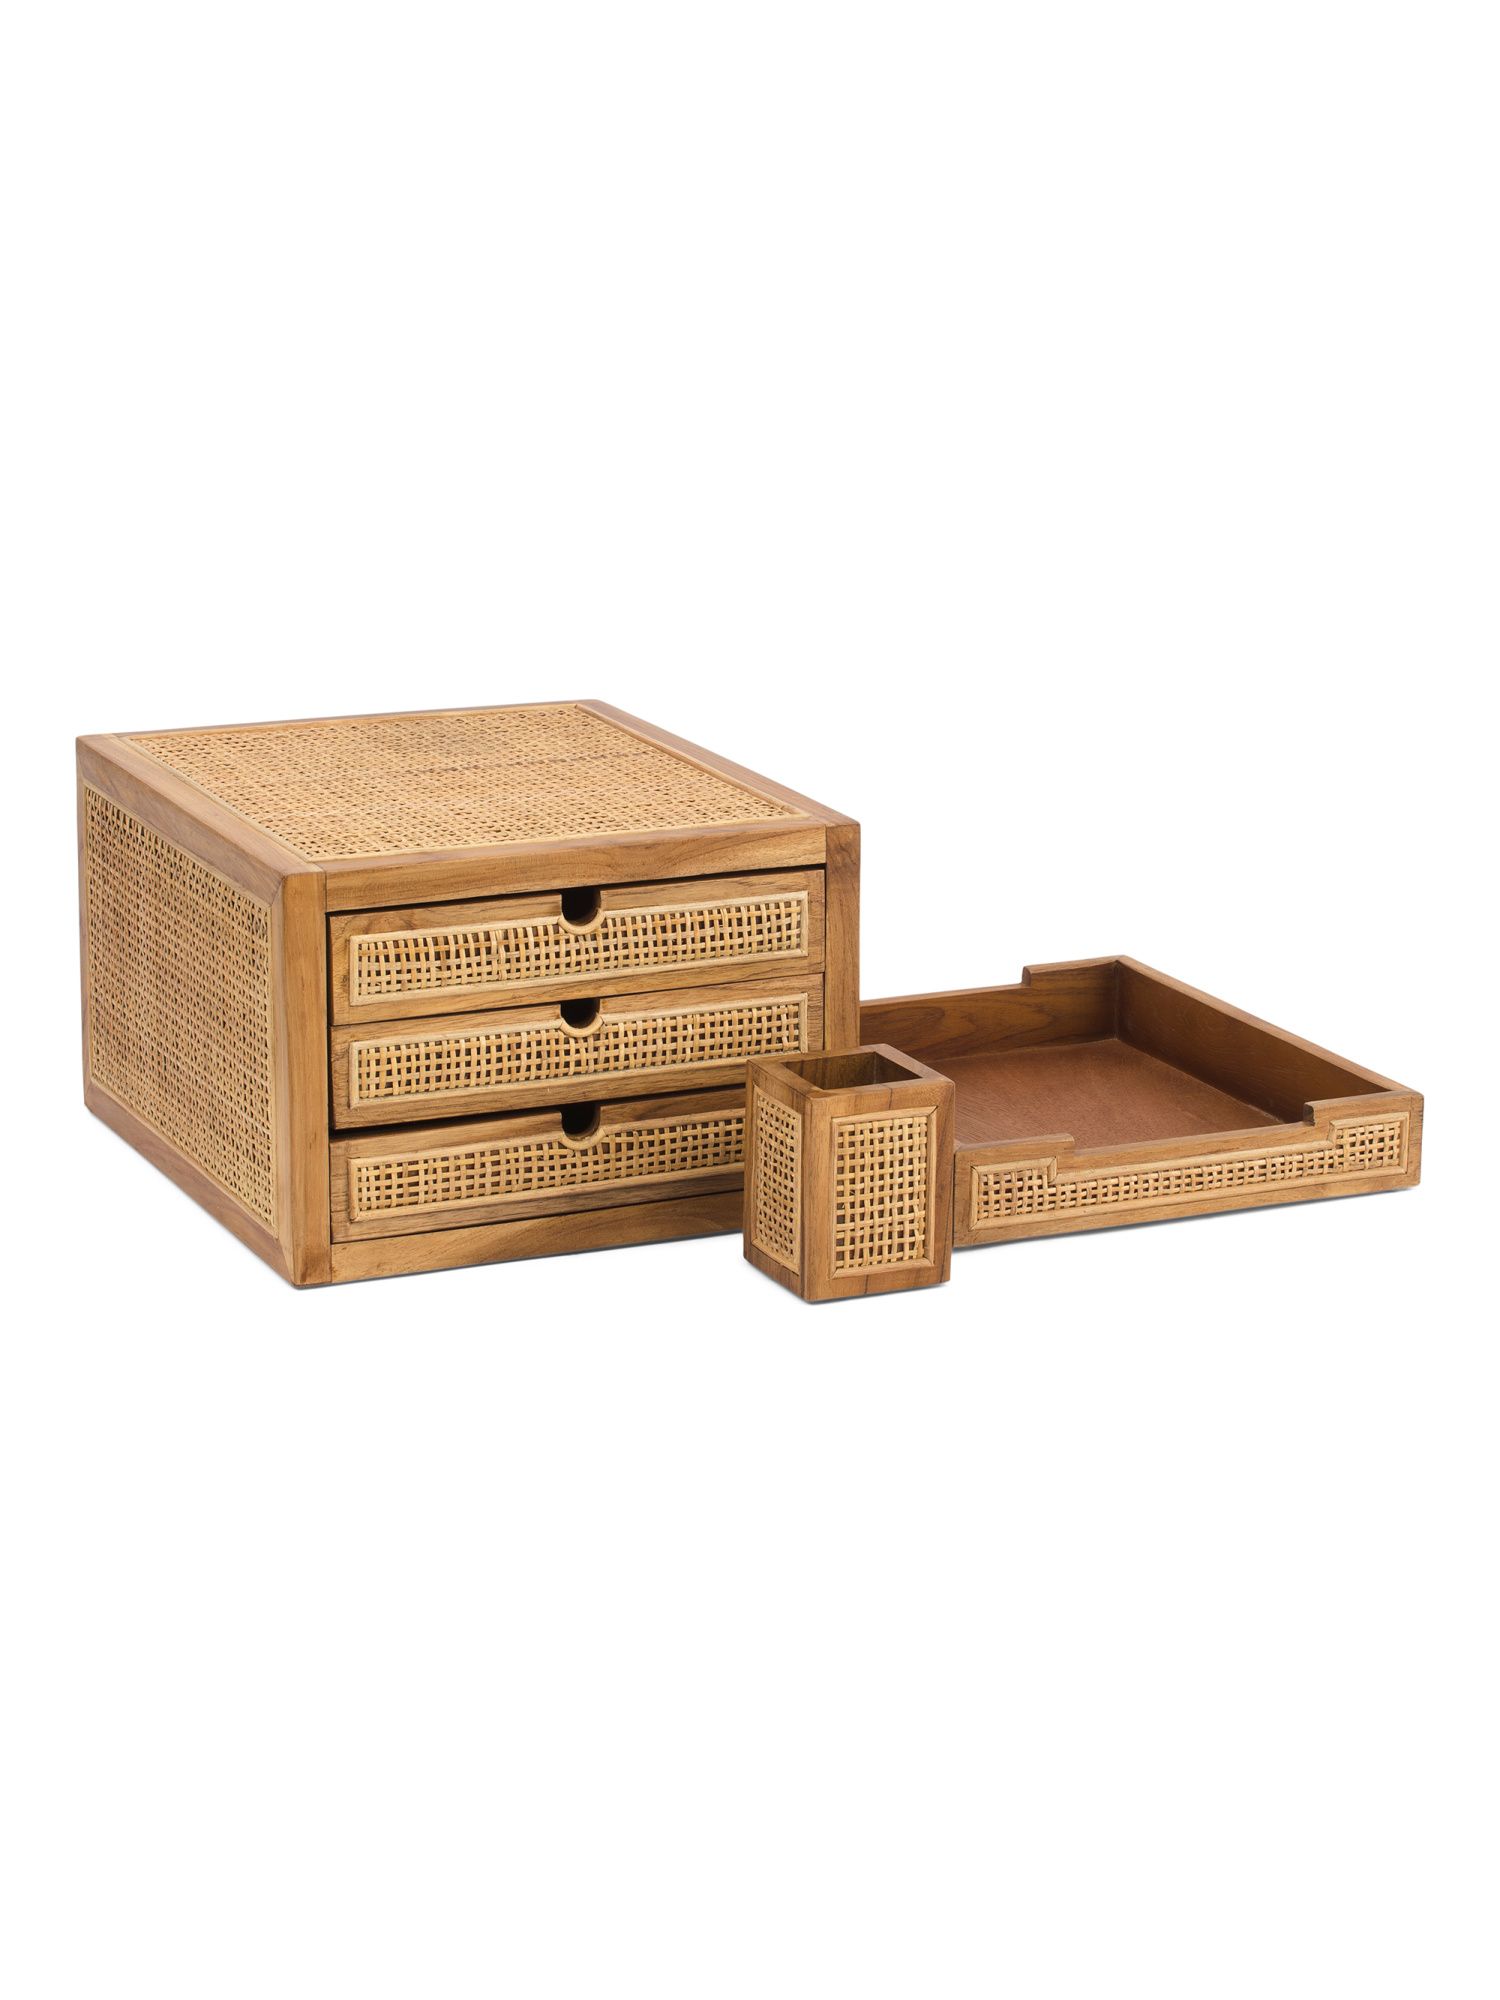 3pc Wood Cane Candon Desk Accessories Set | Marshalls